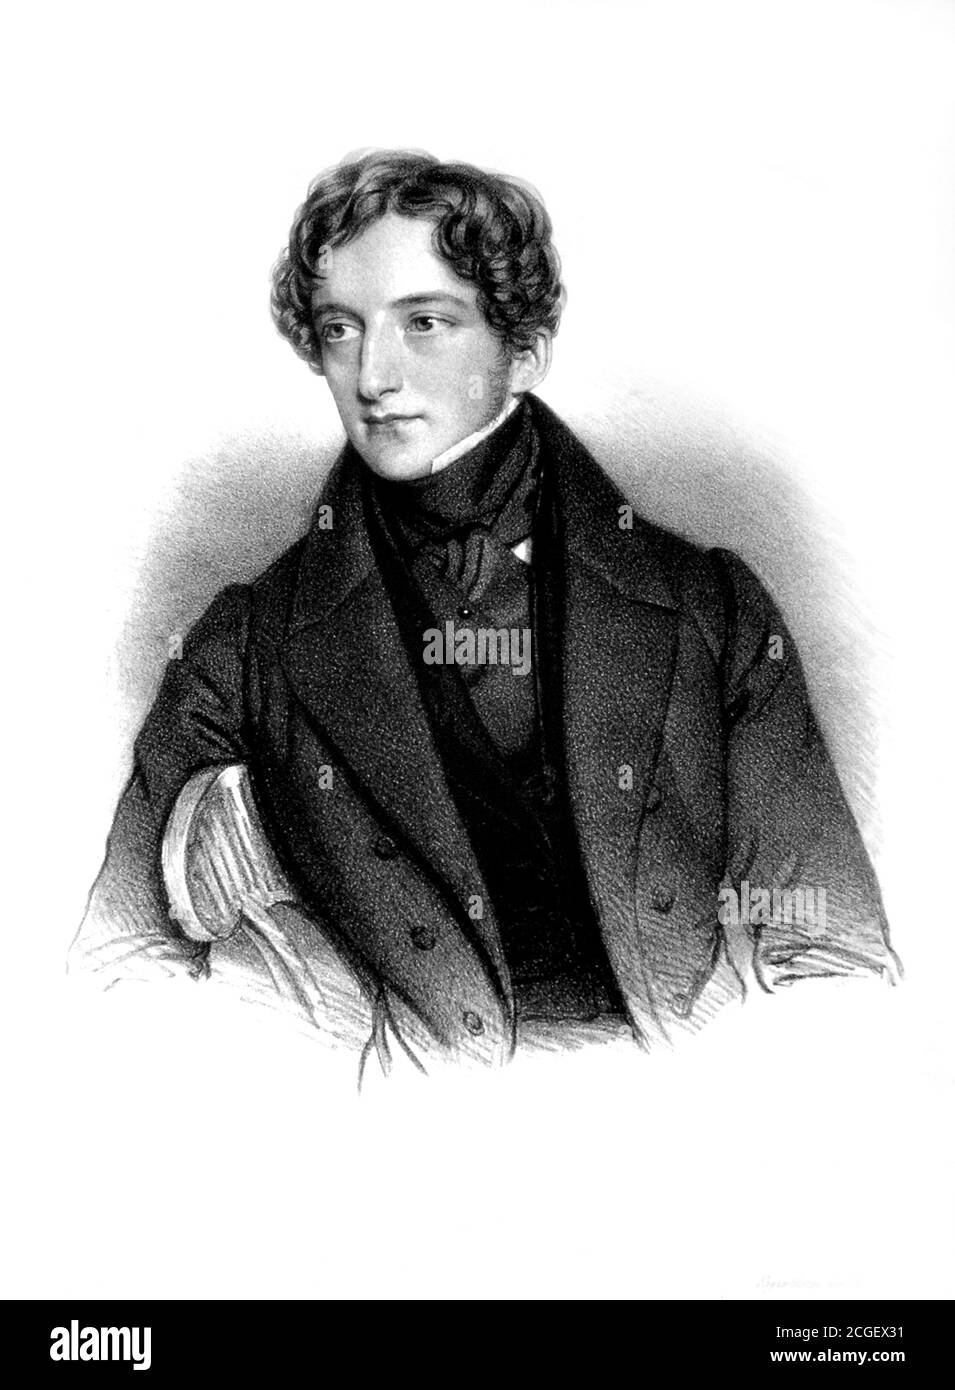 1830 c, AUSTRIA : The austrian pianist and music composer SIGISMUND THALBERG ( Sigismund Fortuné François Thalberg , 1812 - 1871 ). Engraved portrait by Andreas Staub ( 1806 – 1839 ). -  PIANISTA - PIANO - PIANOFORTE - COMPOSITORE - OPERA - MUSICA CLASSICA - classical - portrait - ritratto  - OPERATIC - OPERA LIRICA  - classica - classical - collar - colletto  --- Archivio GBB Stock Photo